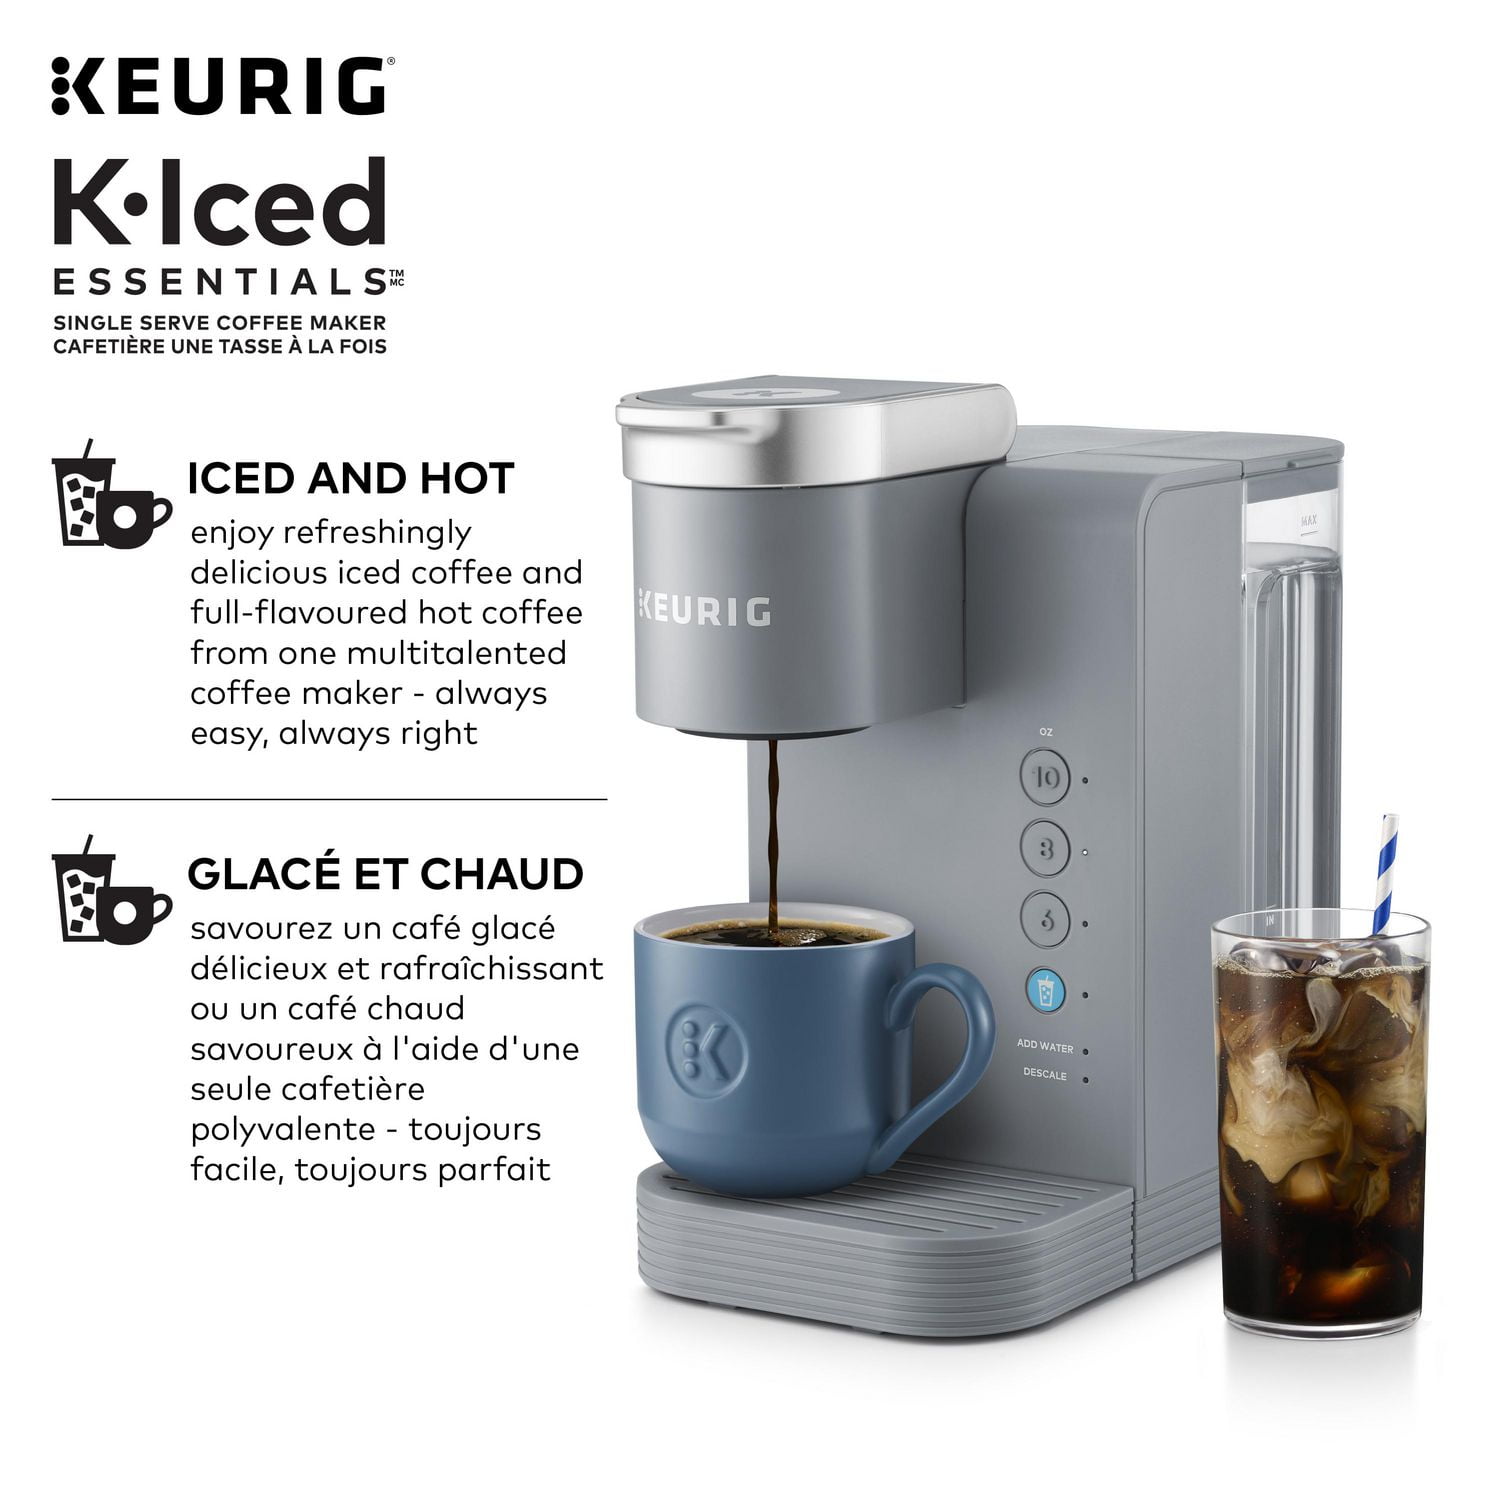 Keurig® K-Iced Essentials™ Single Serve Coffee Maker, 3 CUP SIZES